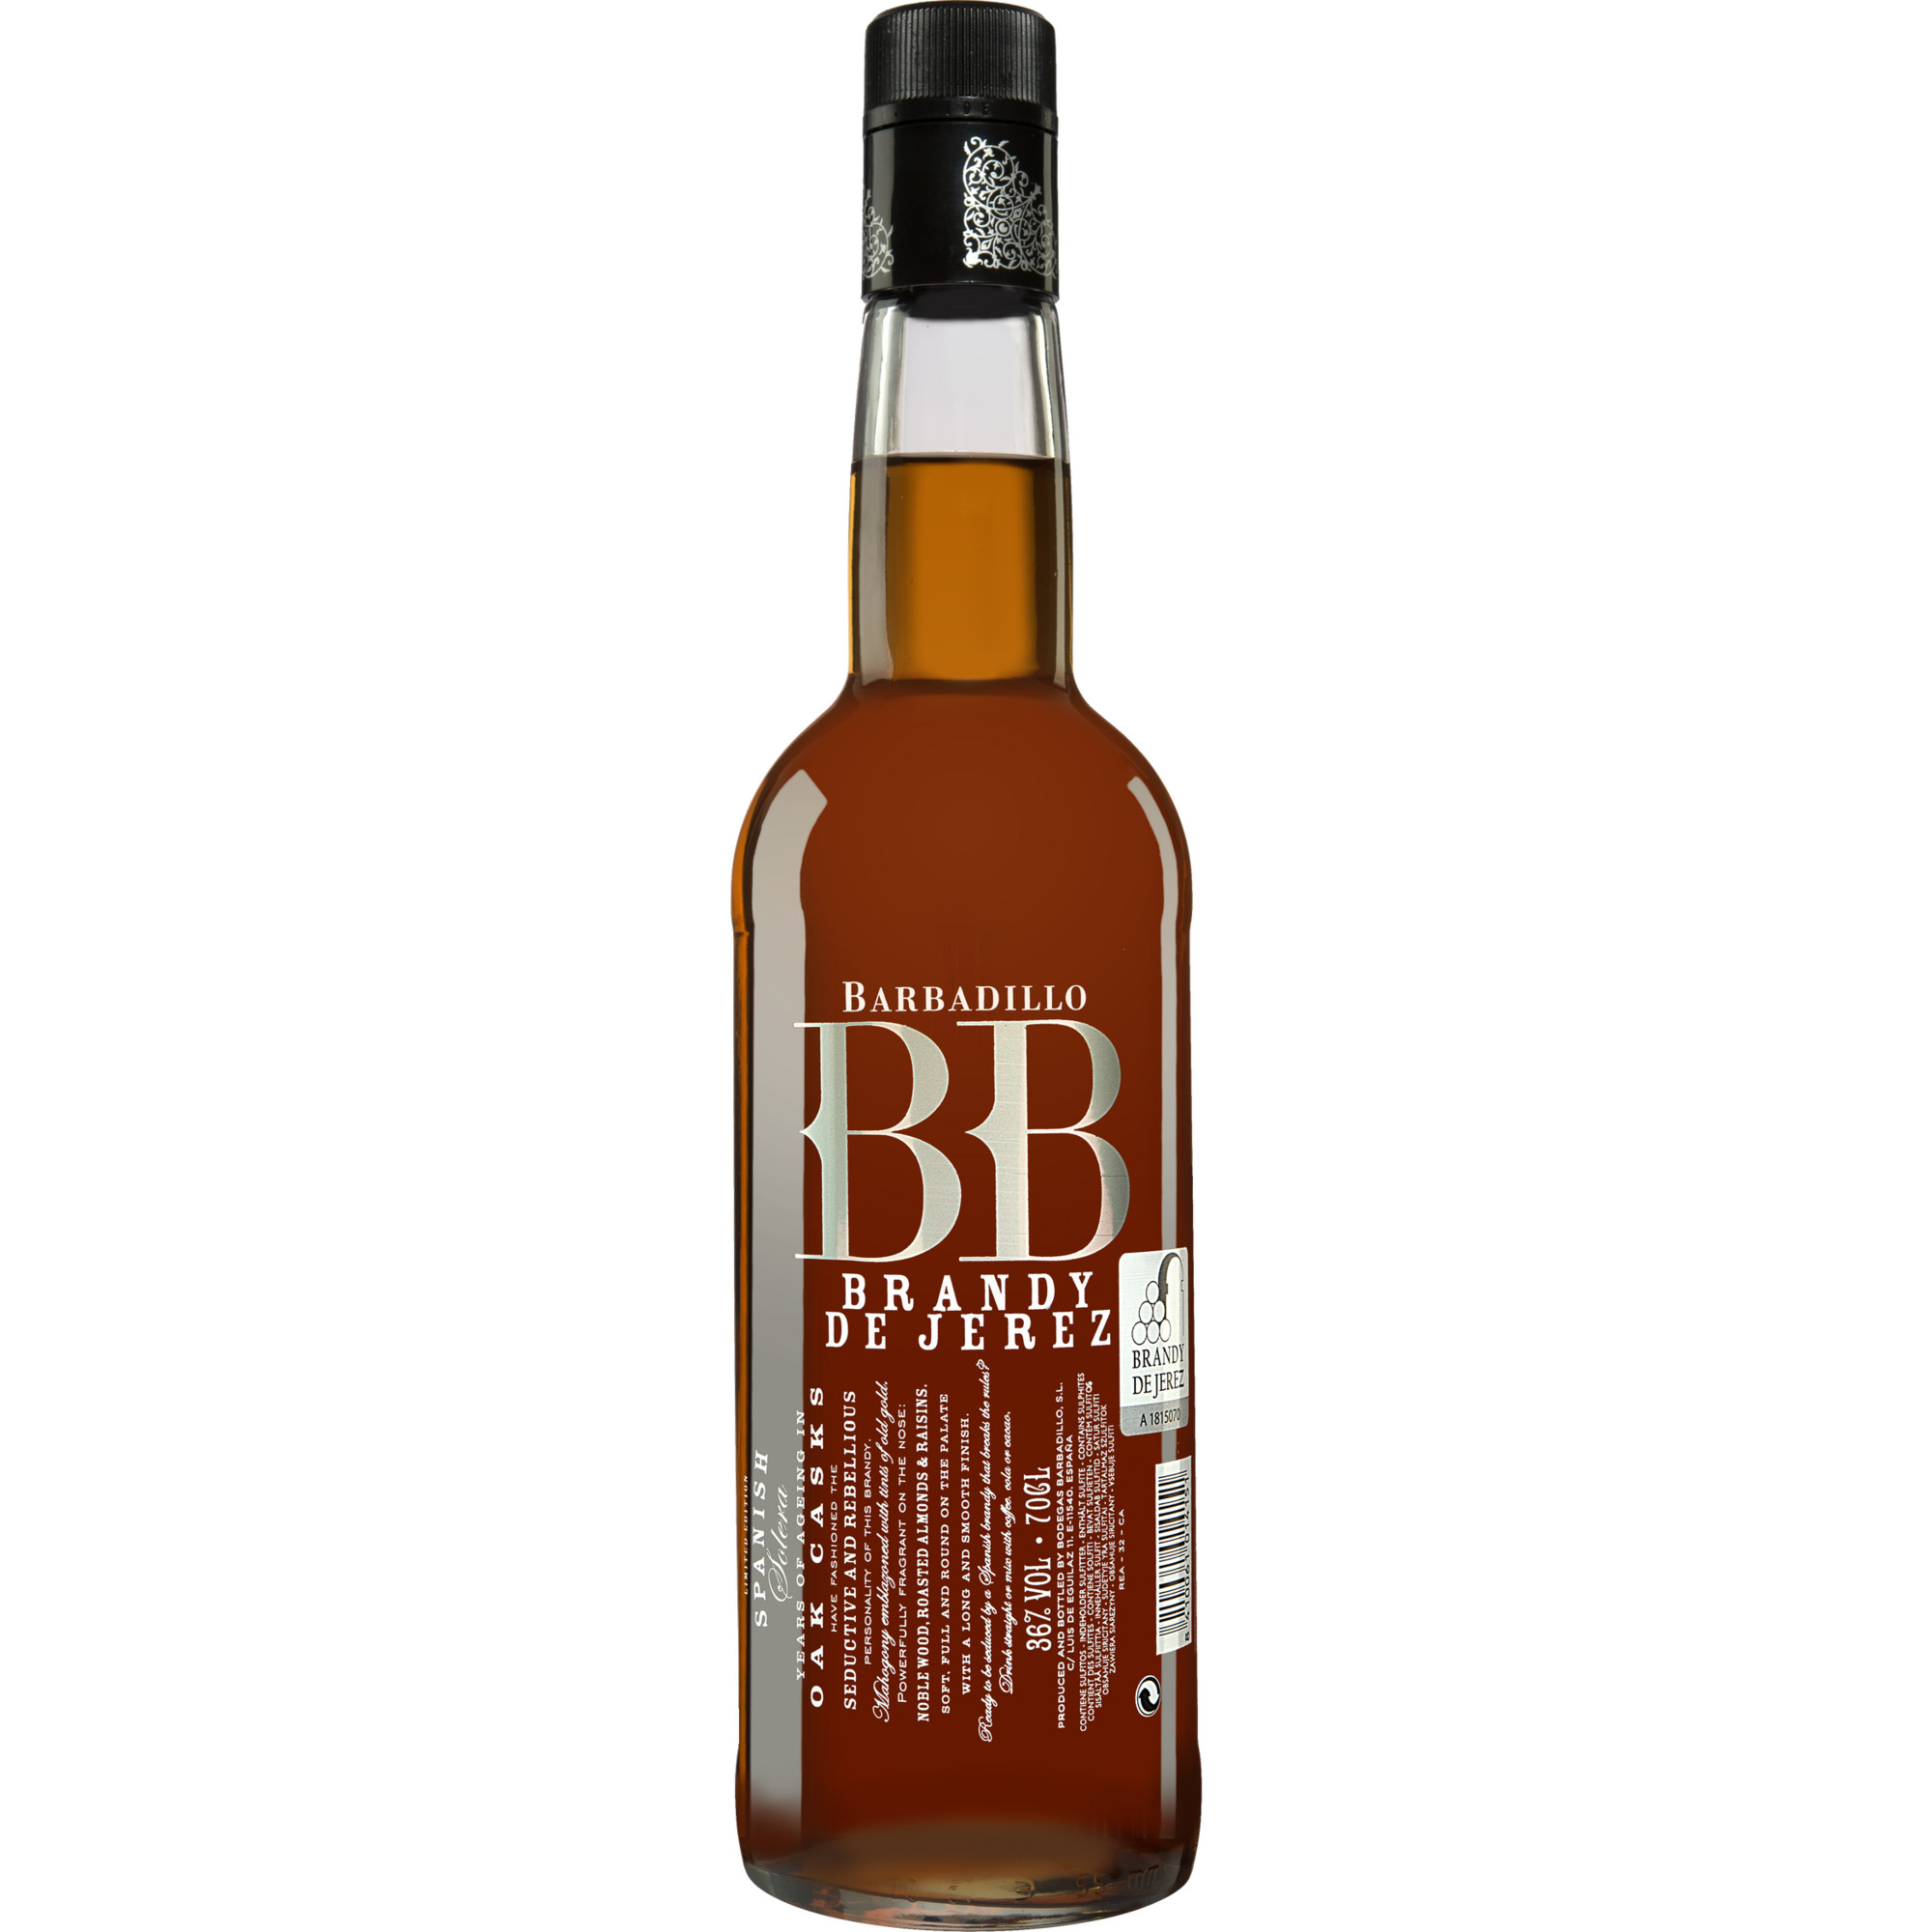 Image of Bb Barbadillo Brandy